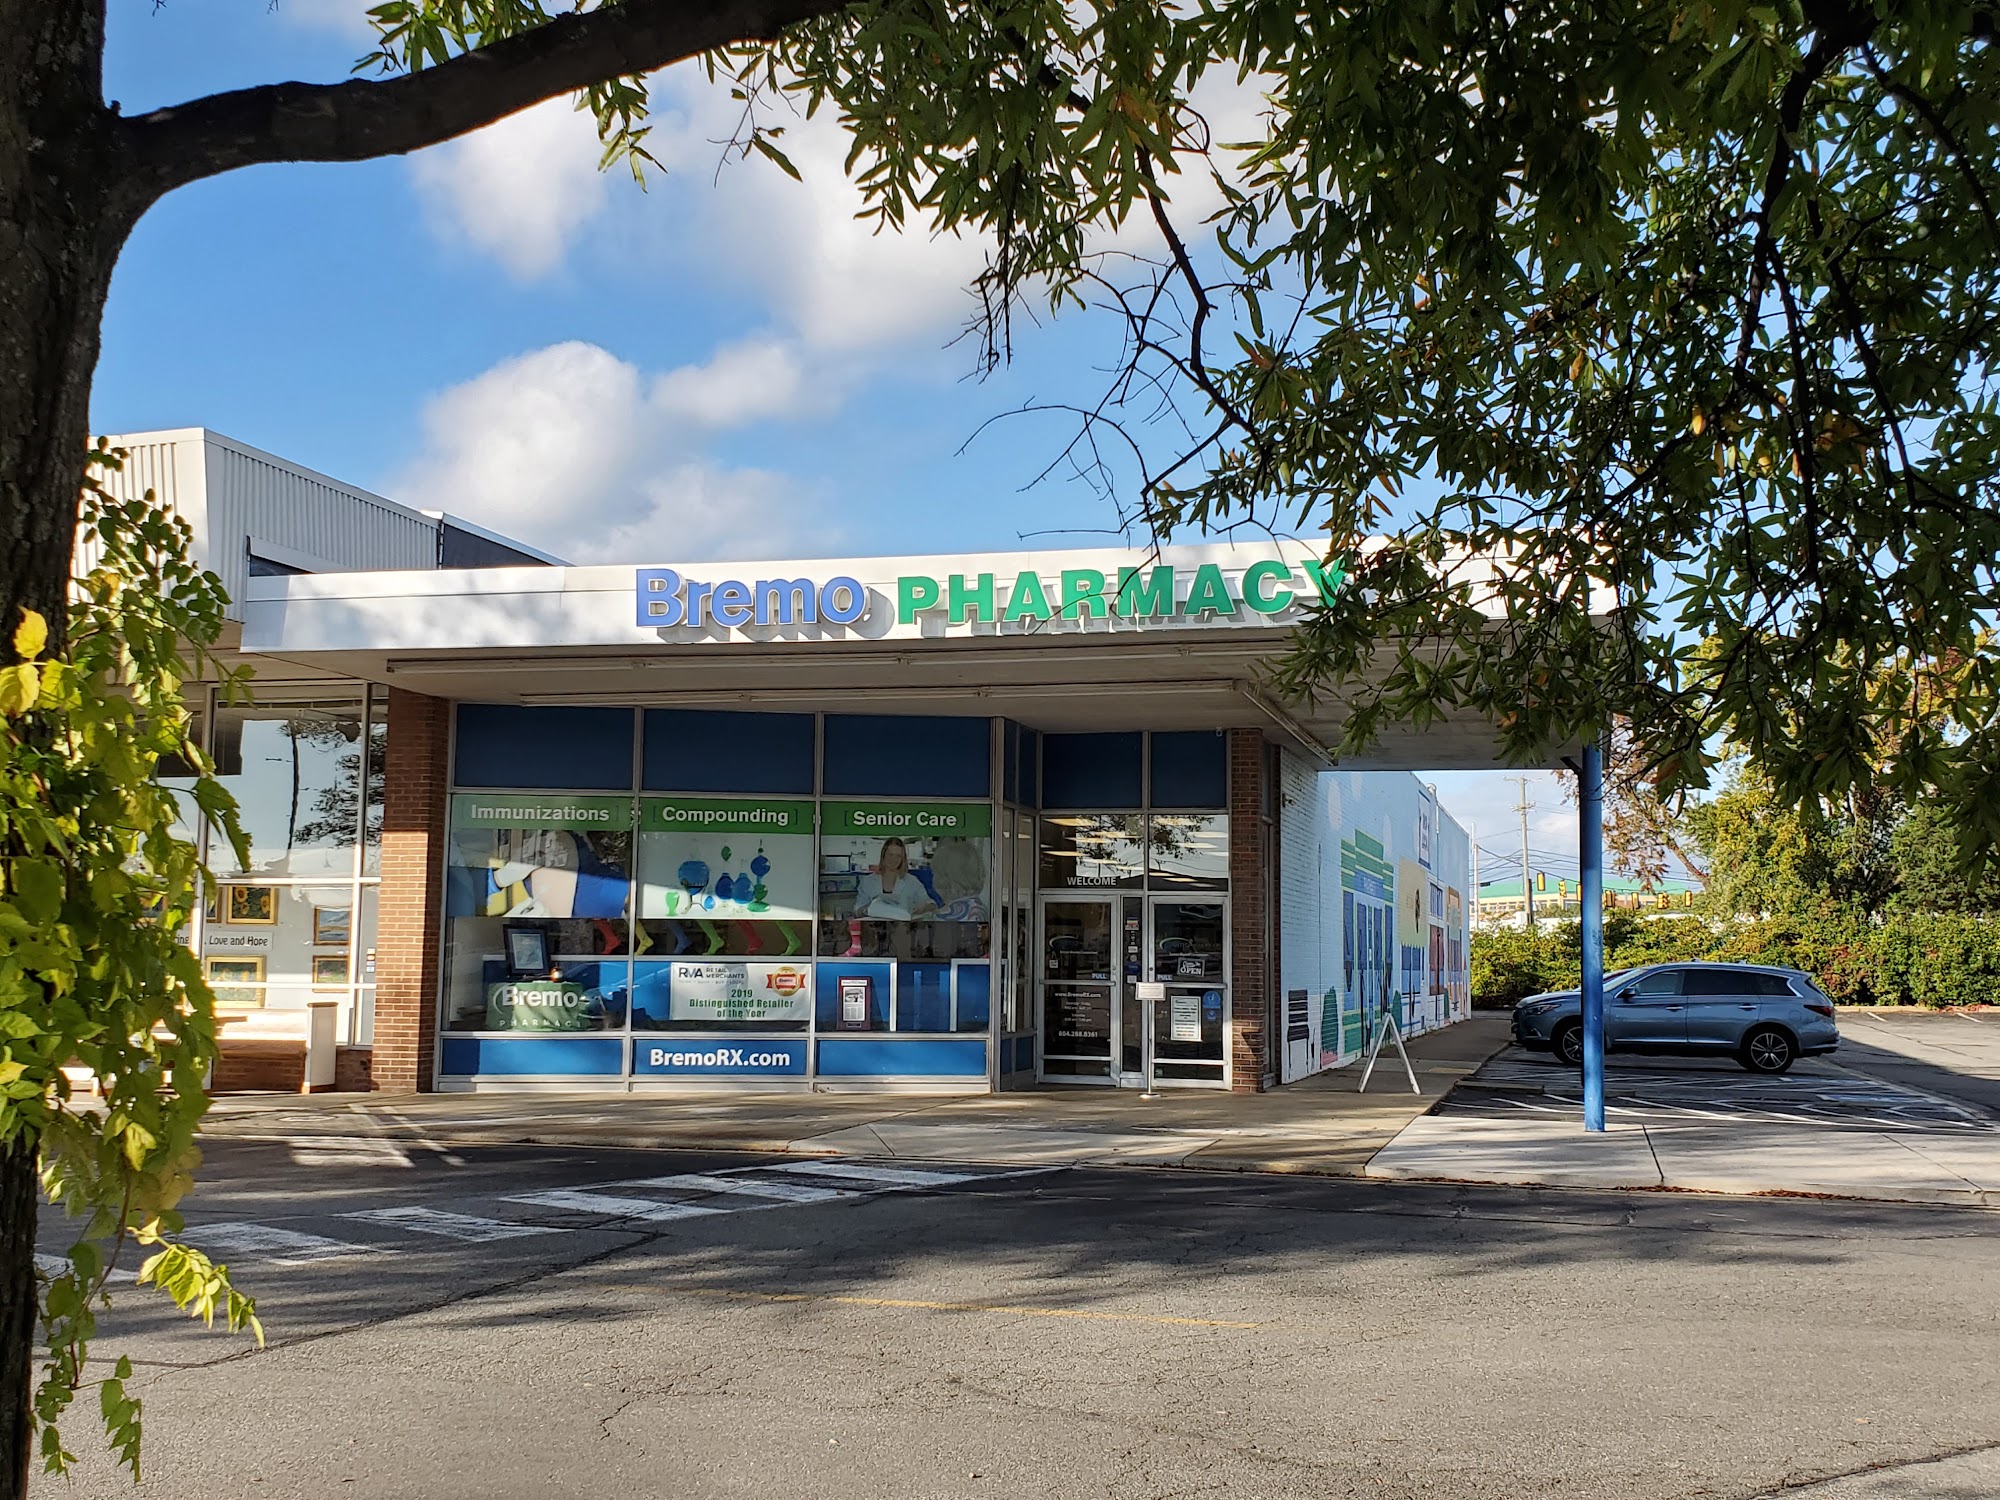 Bremo Pharmacy